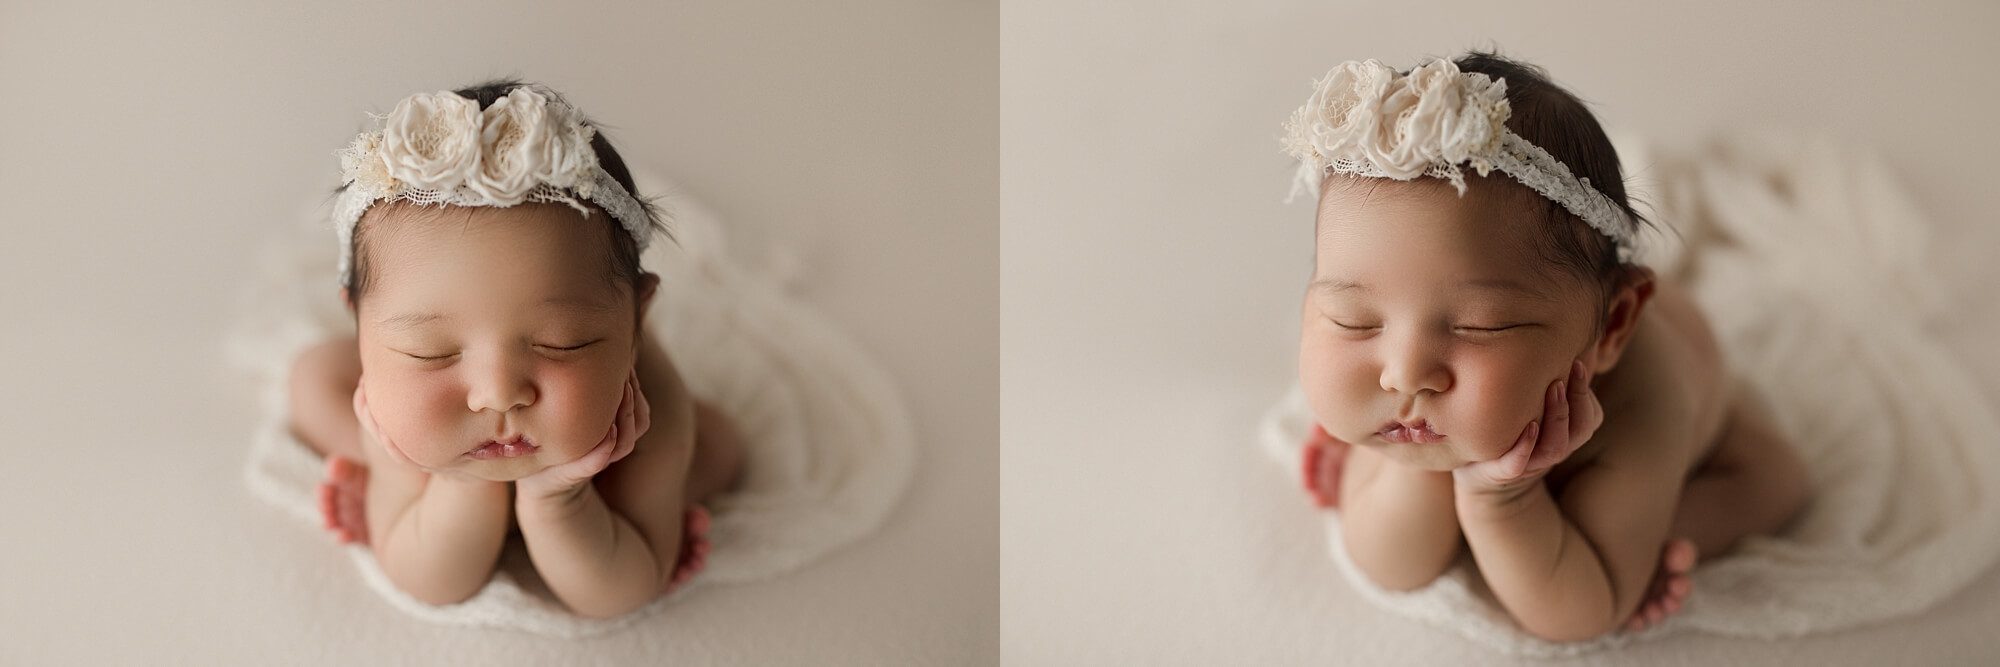 newborn photographer tacoma | baby girl studio photography session